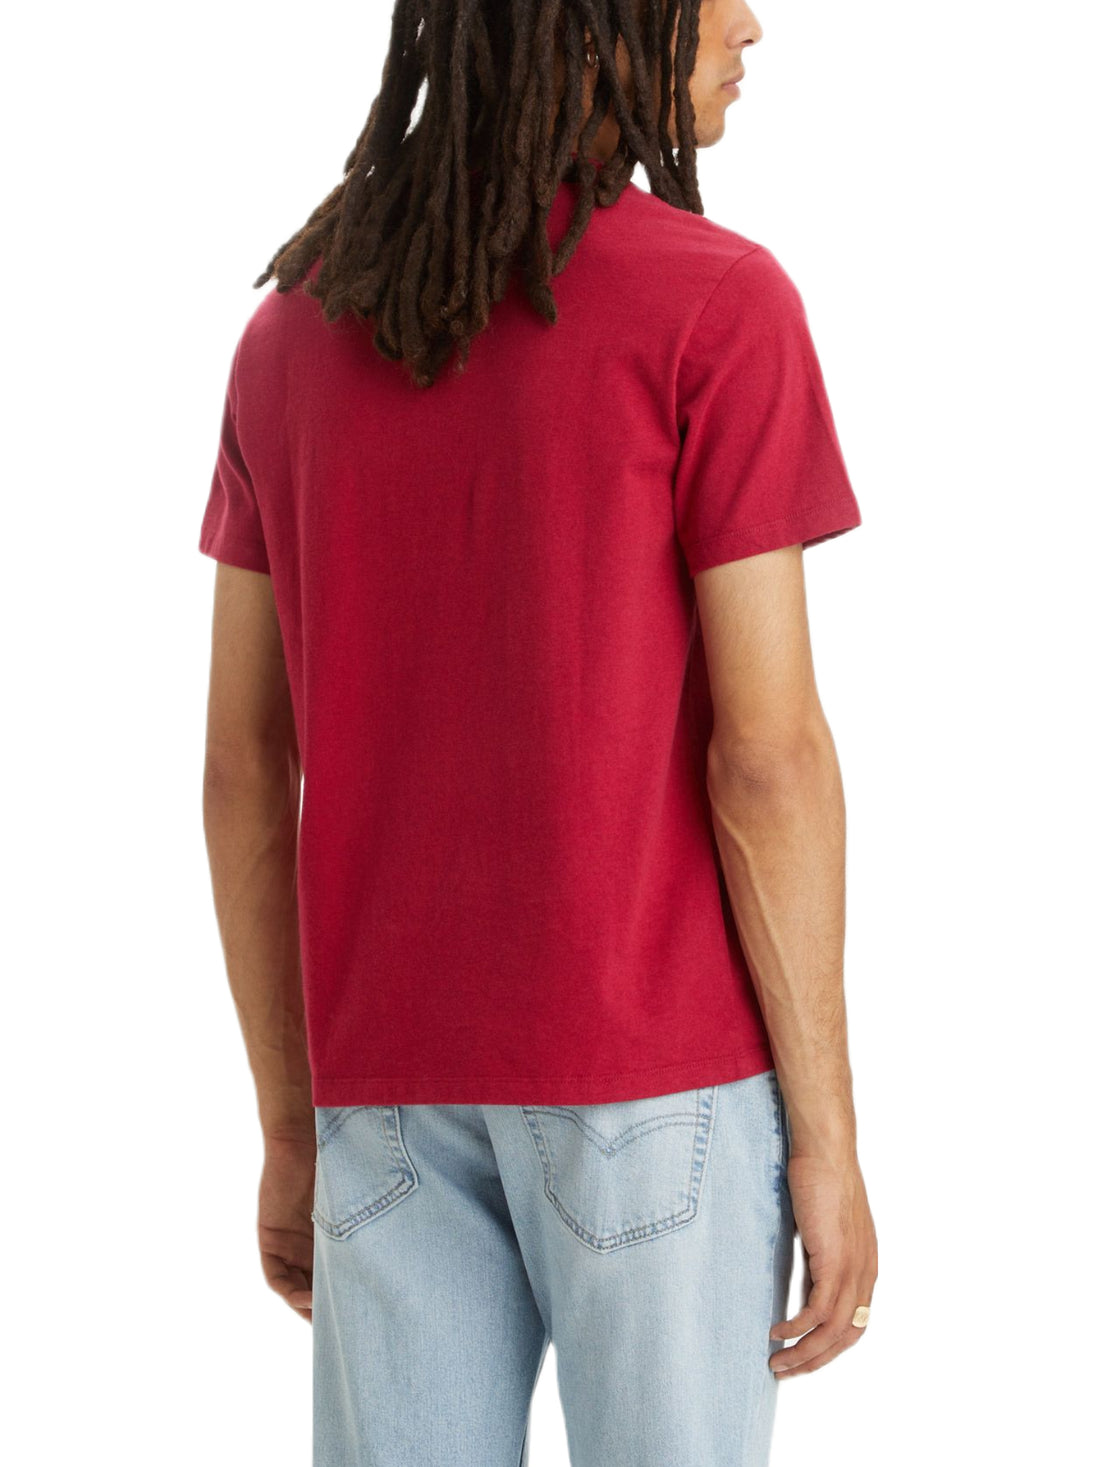 T-shirt Rosso Levi's